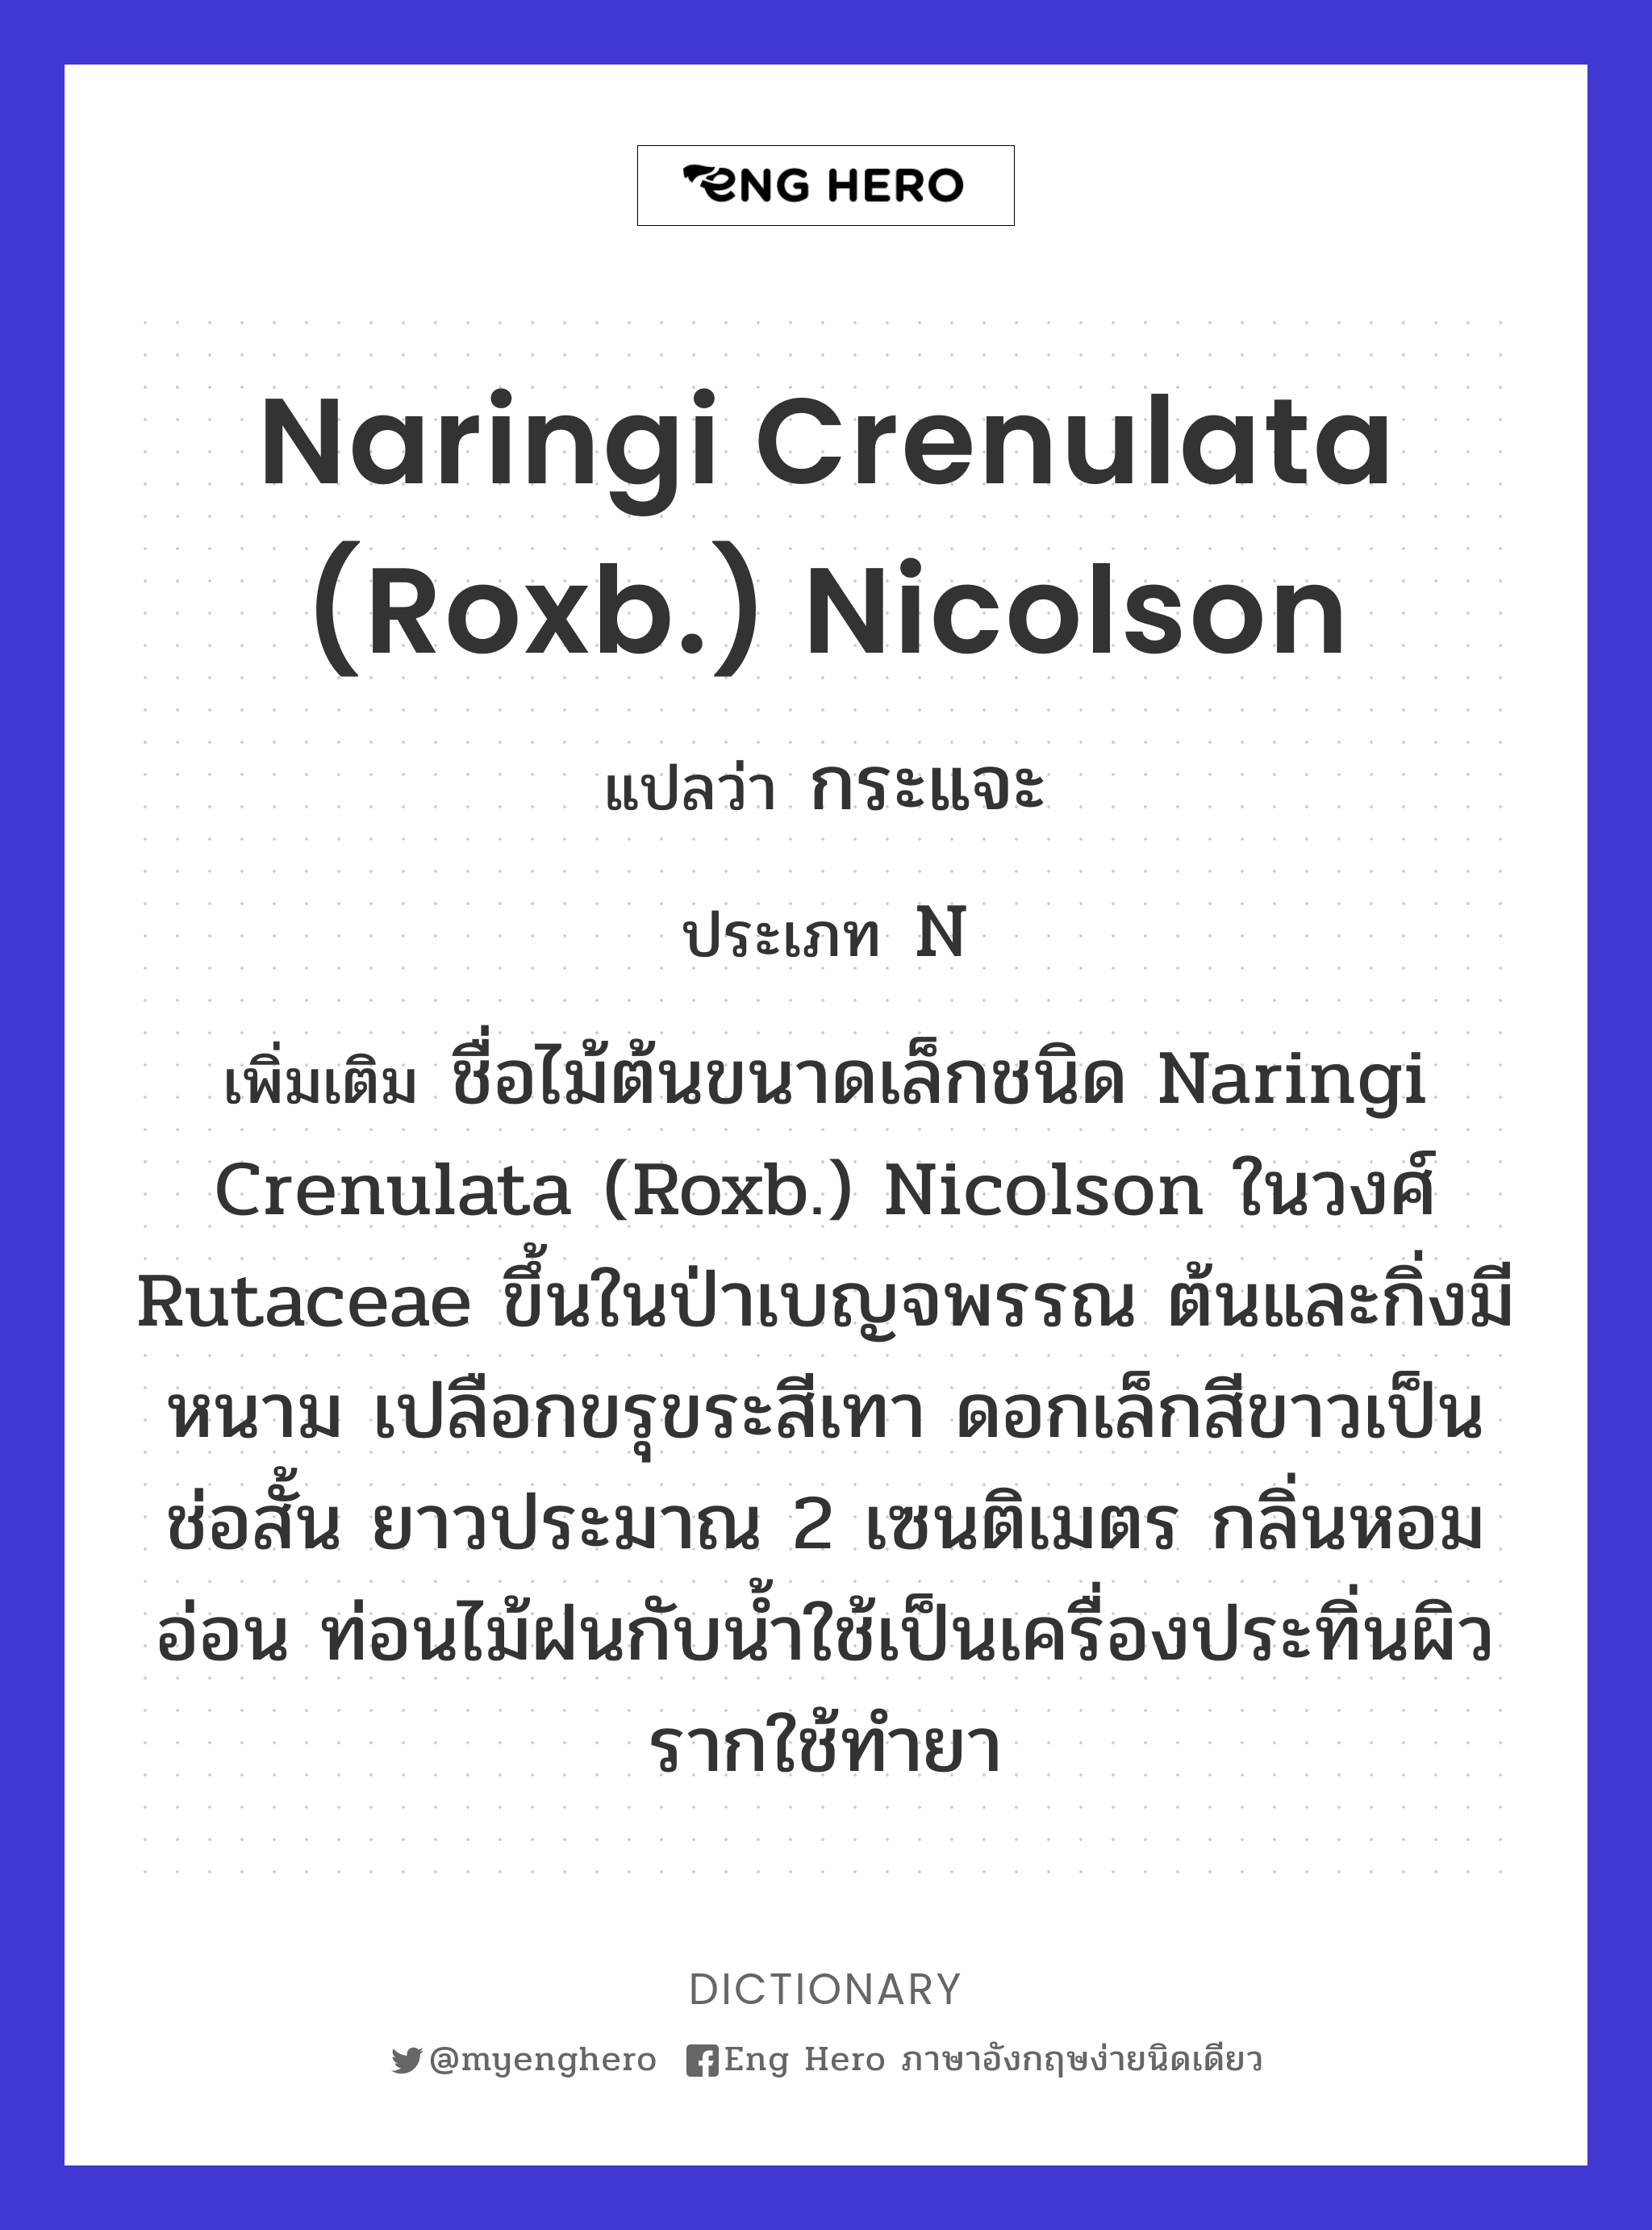 Naringi crenulata (Roxb.) Nicolson